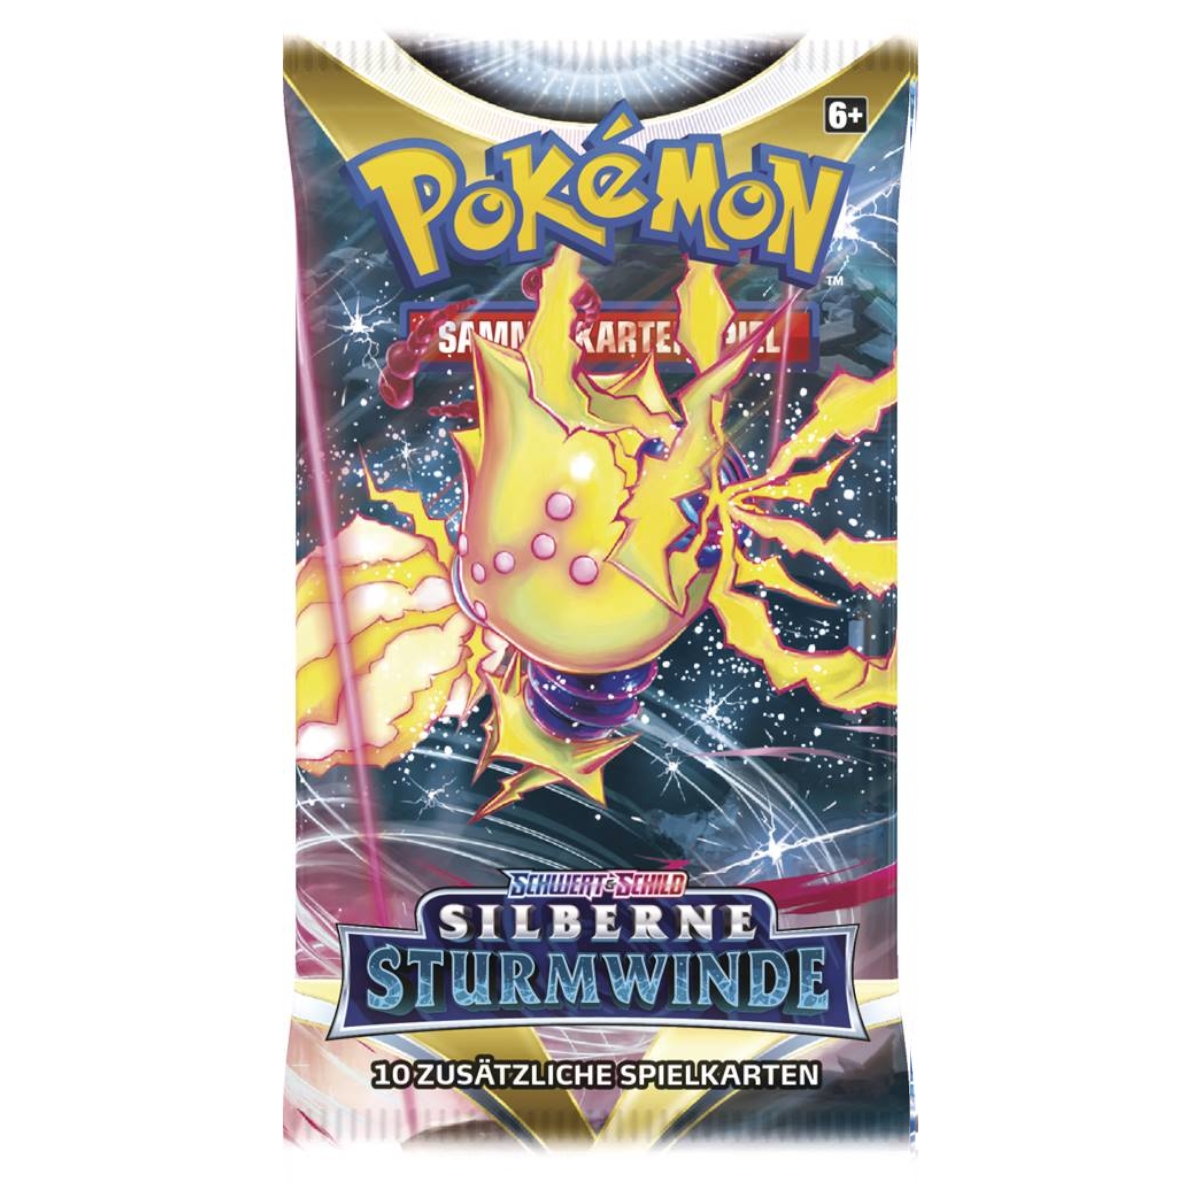 Pokémon - Silberne Sturmwinde Booster